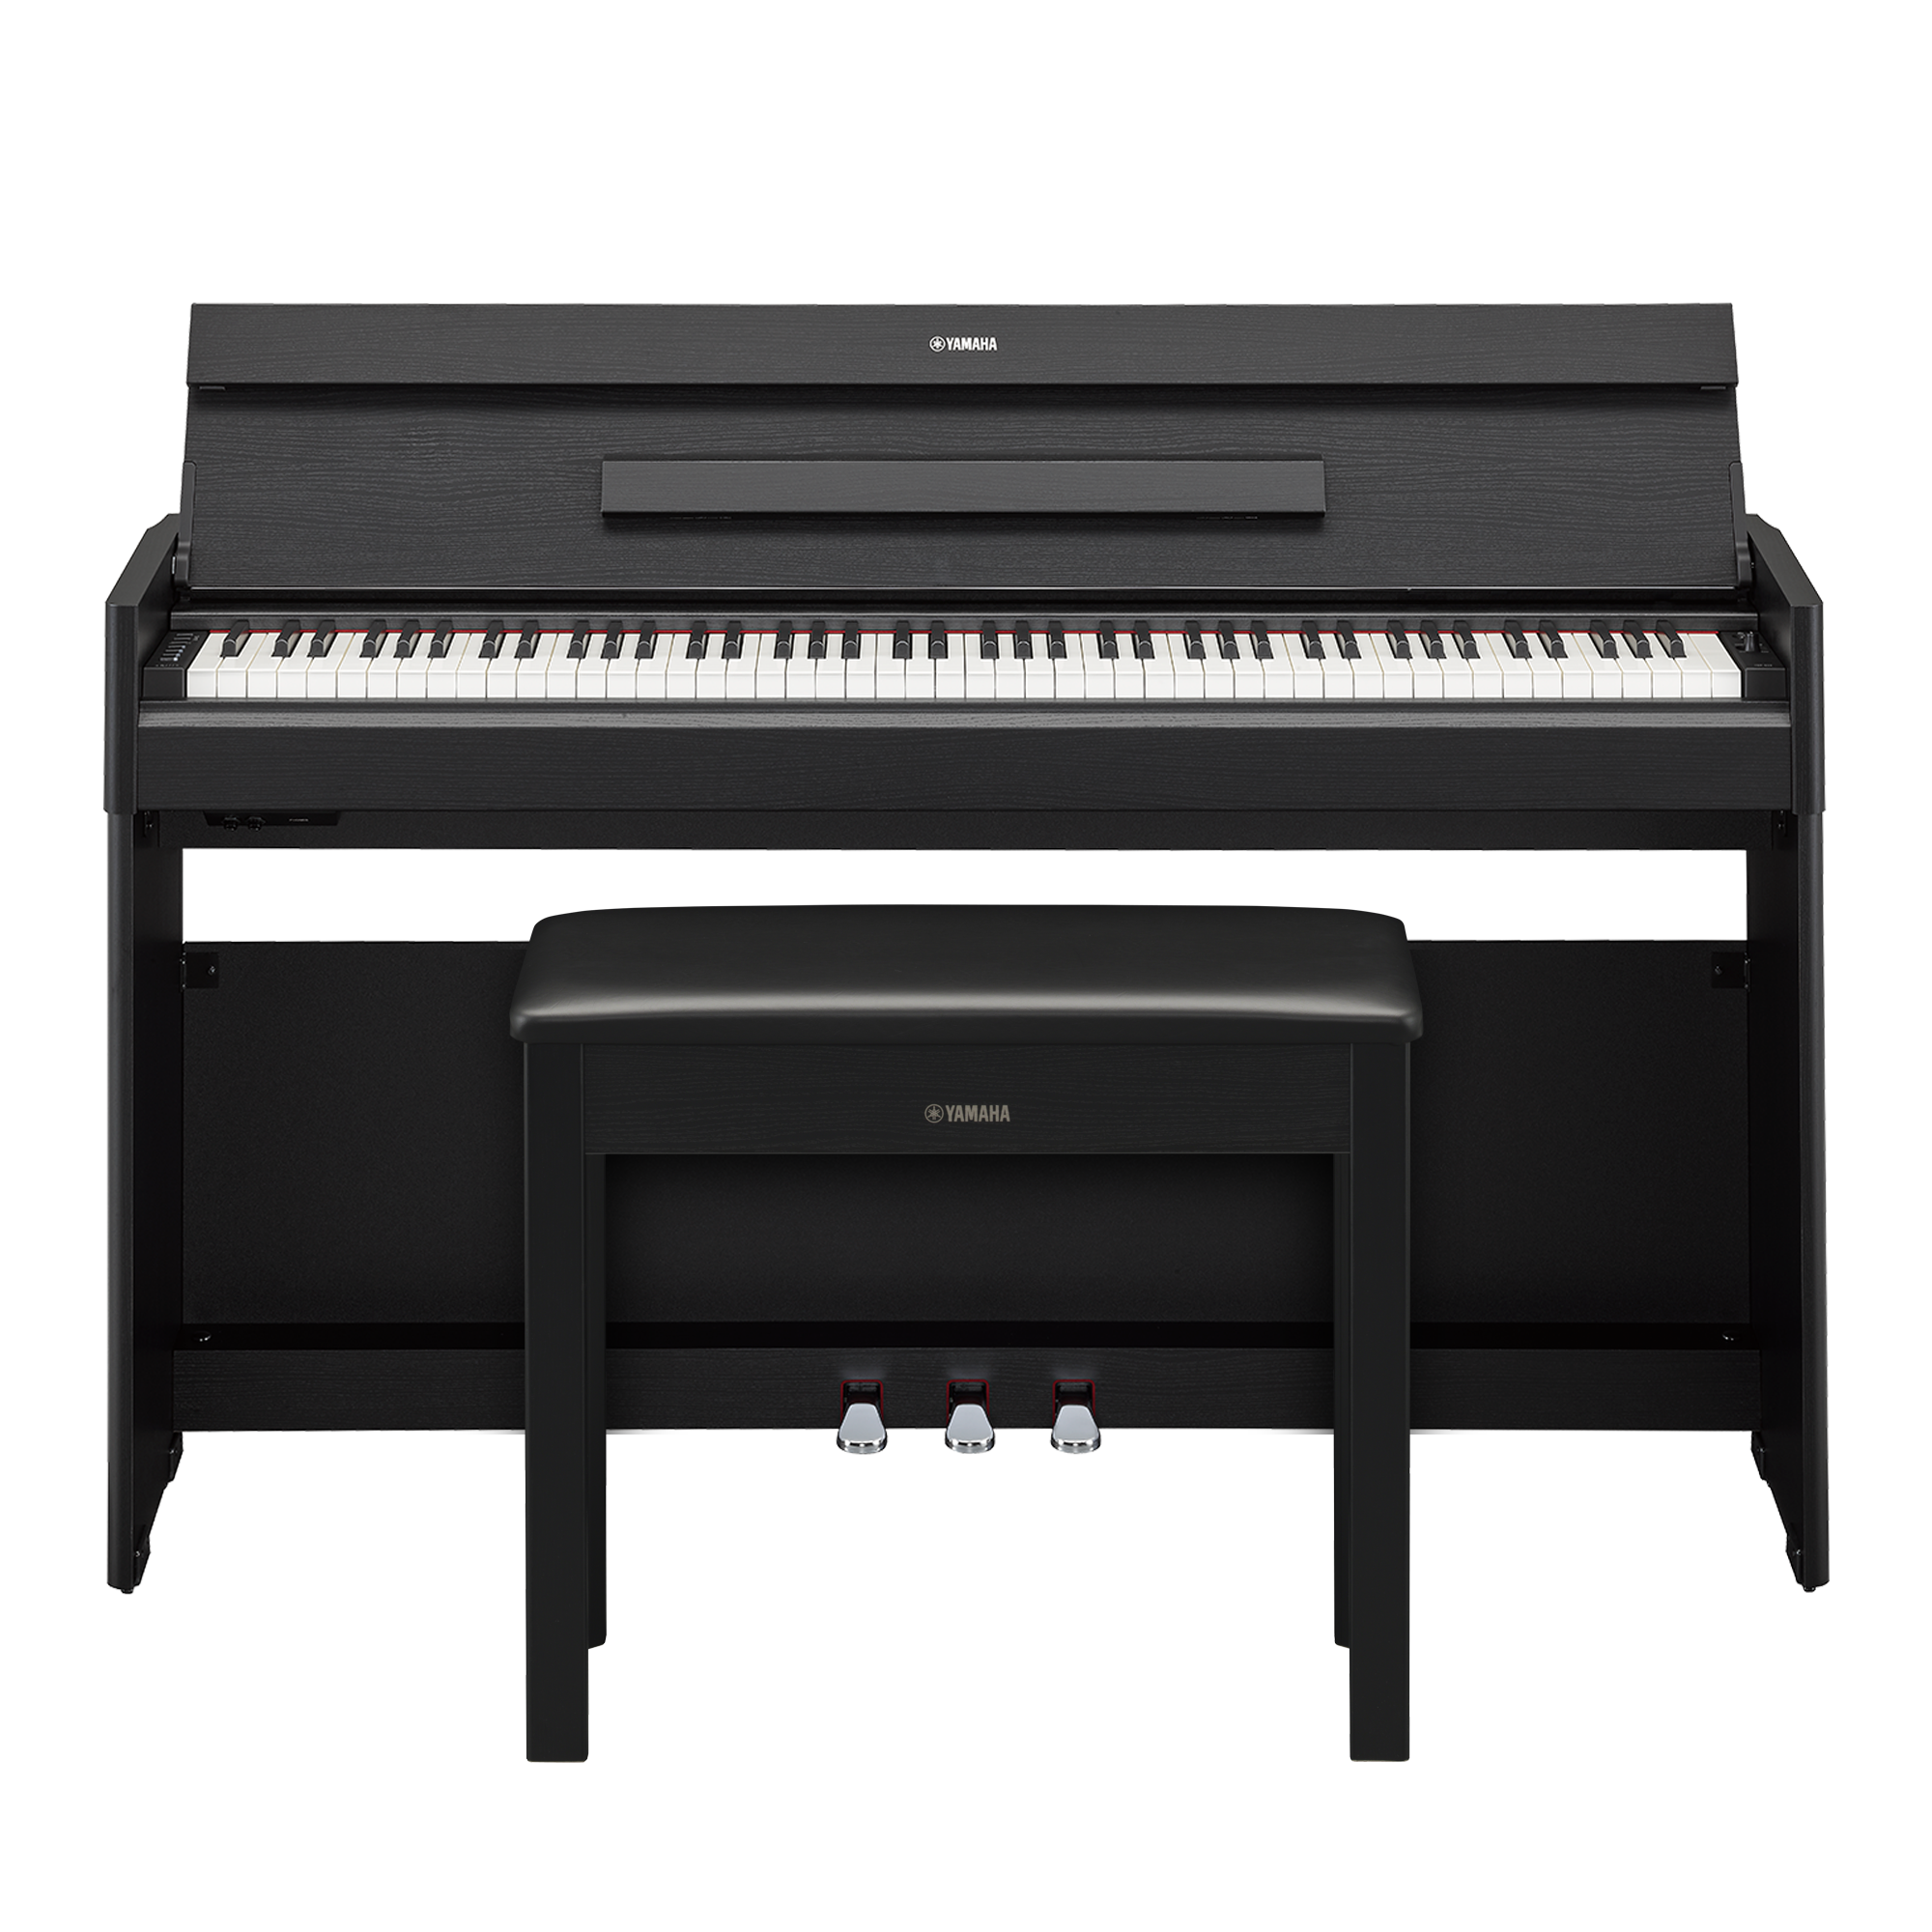 YDP-S55 ARIUS Digital Piano - Exclusive Music School Package